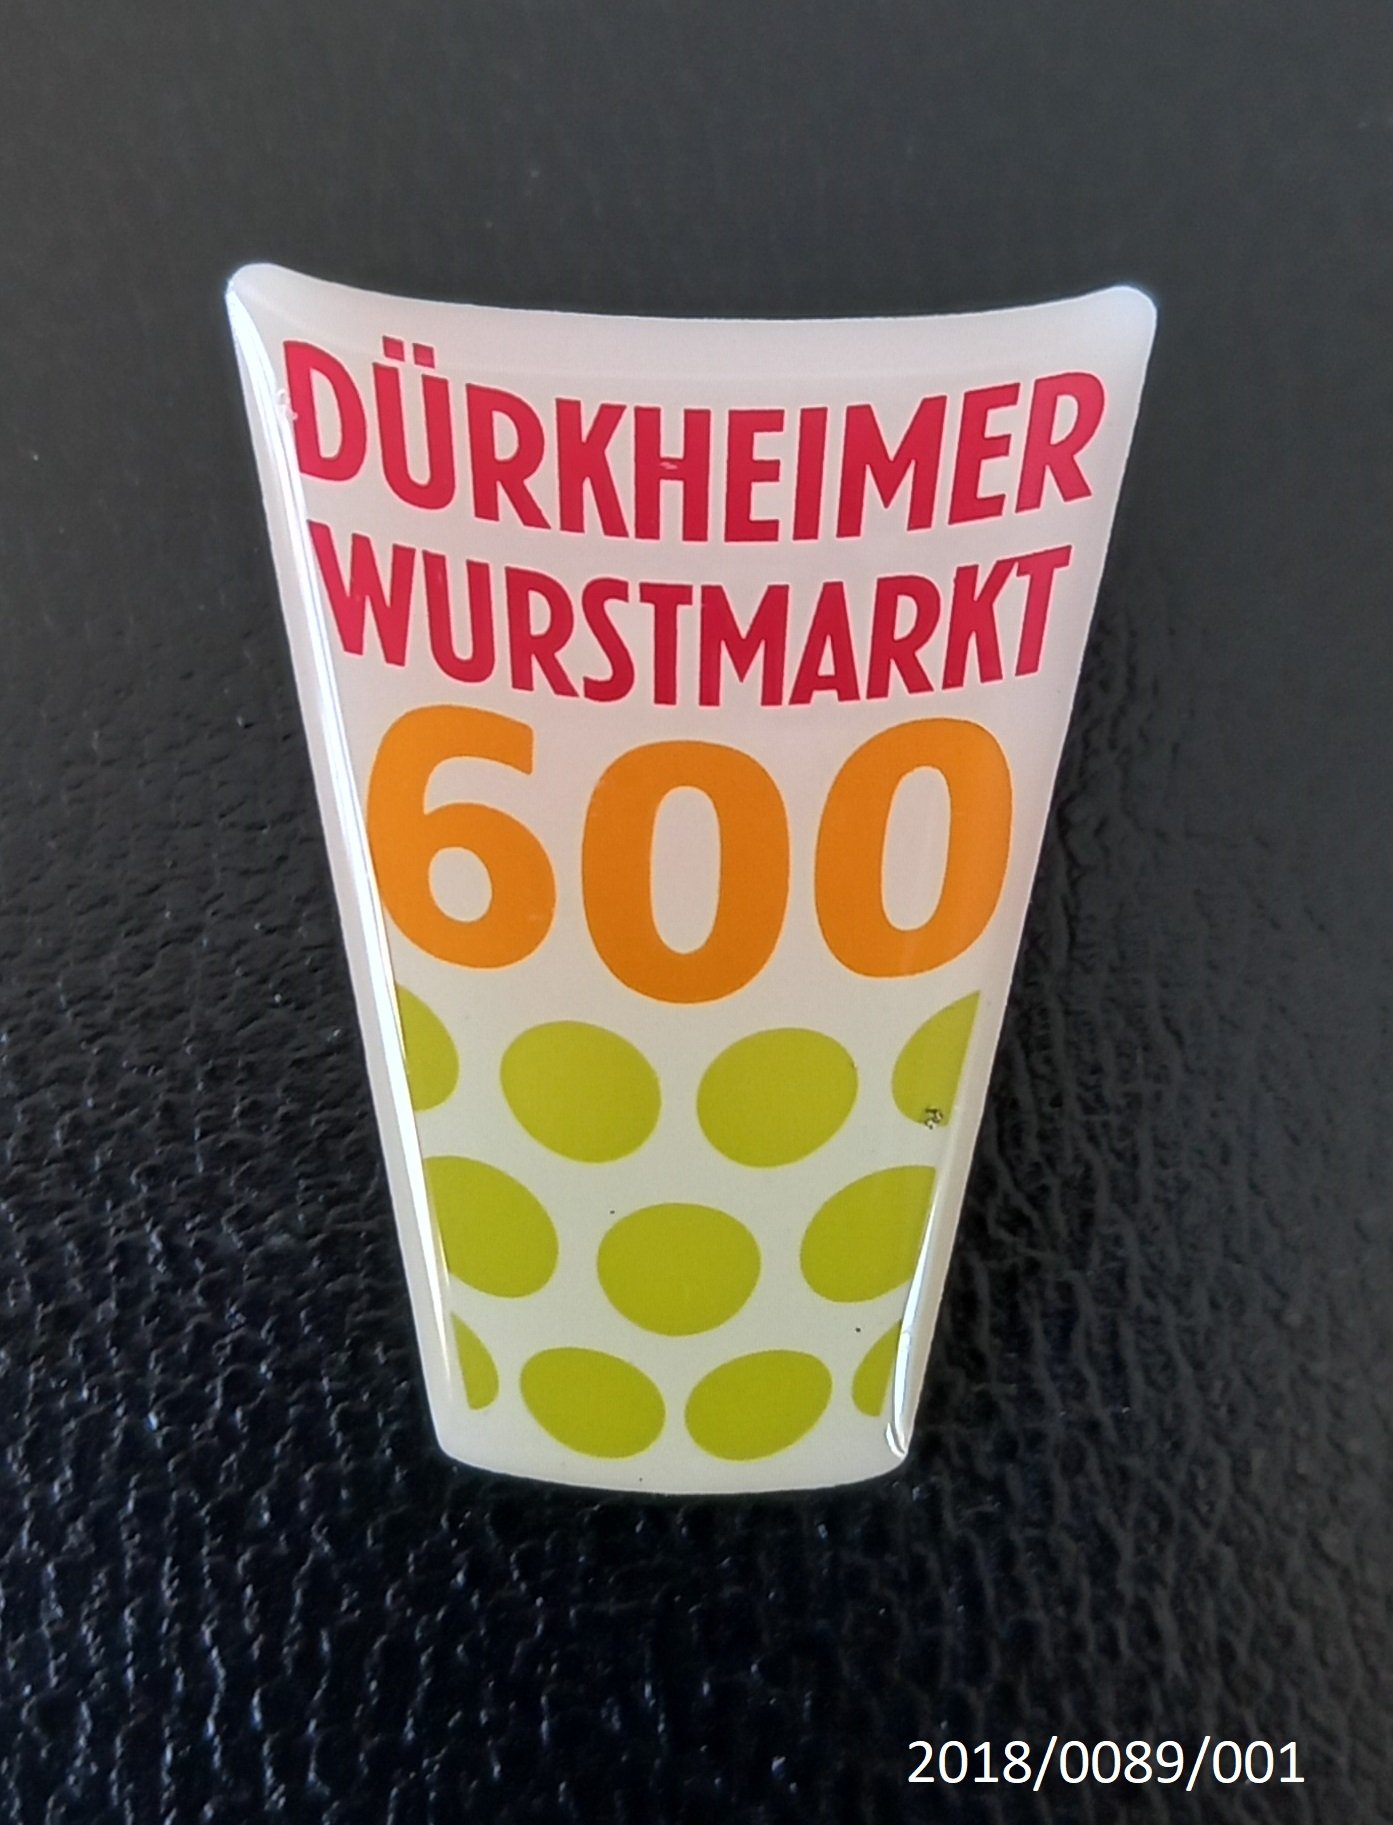 Anstecker zum 600. Wurstmarkt (Stadtmuseum Bad Dürkheim im Kulturzentrum Haus Catoir CC BY-NC-SA)